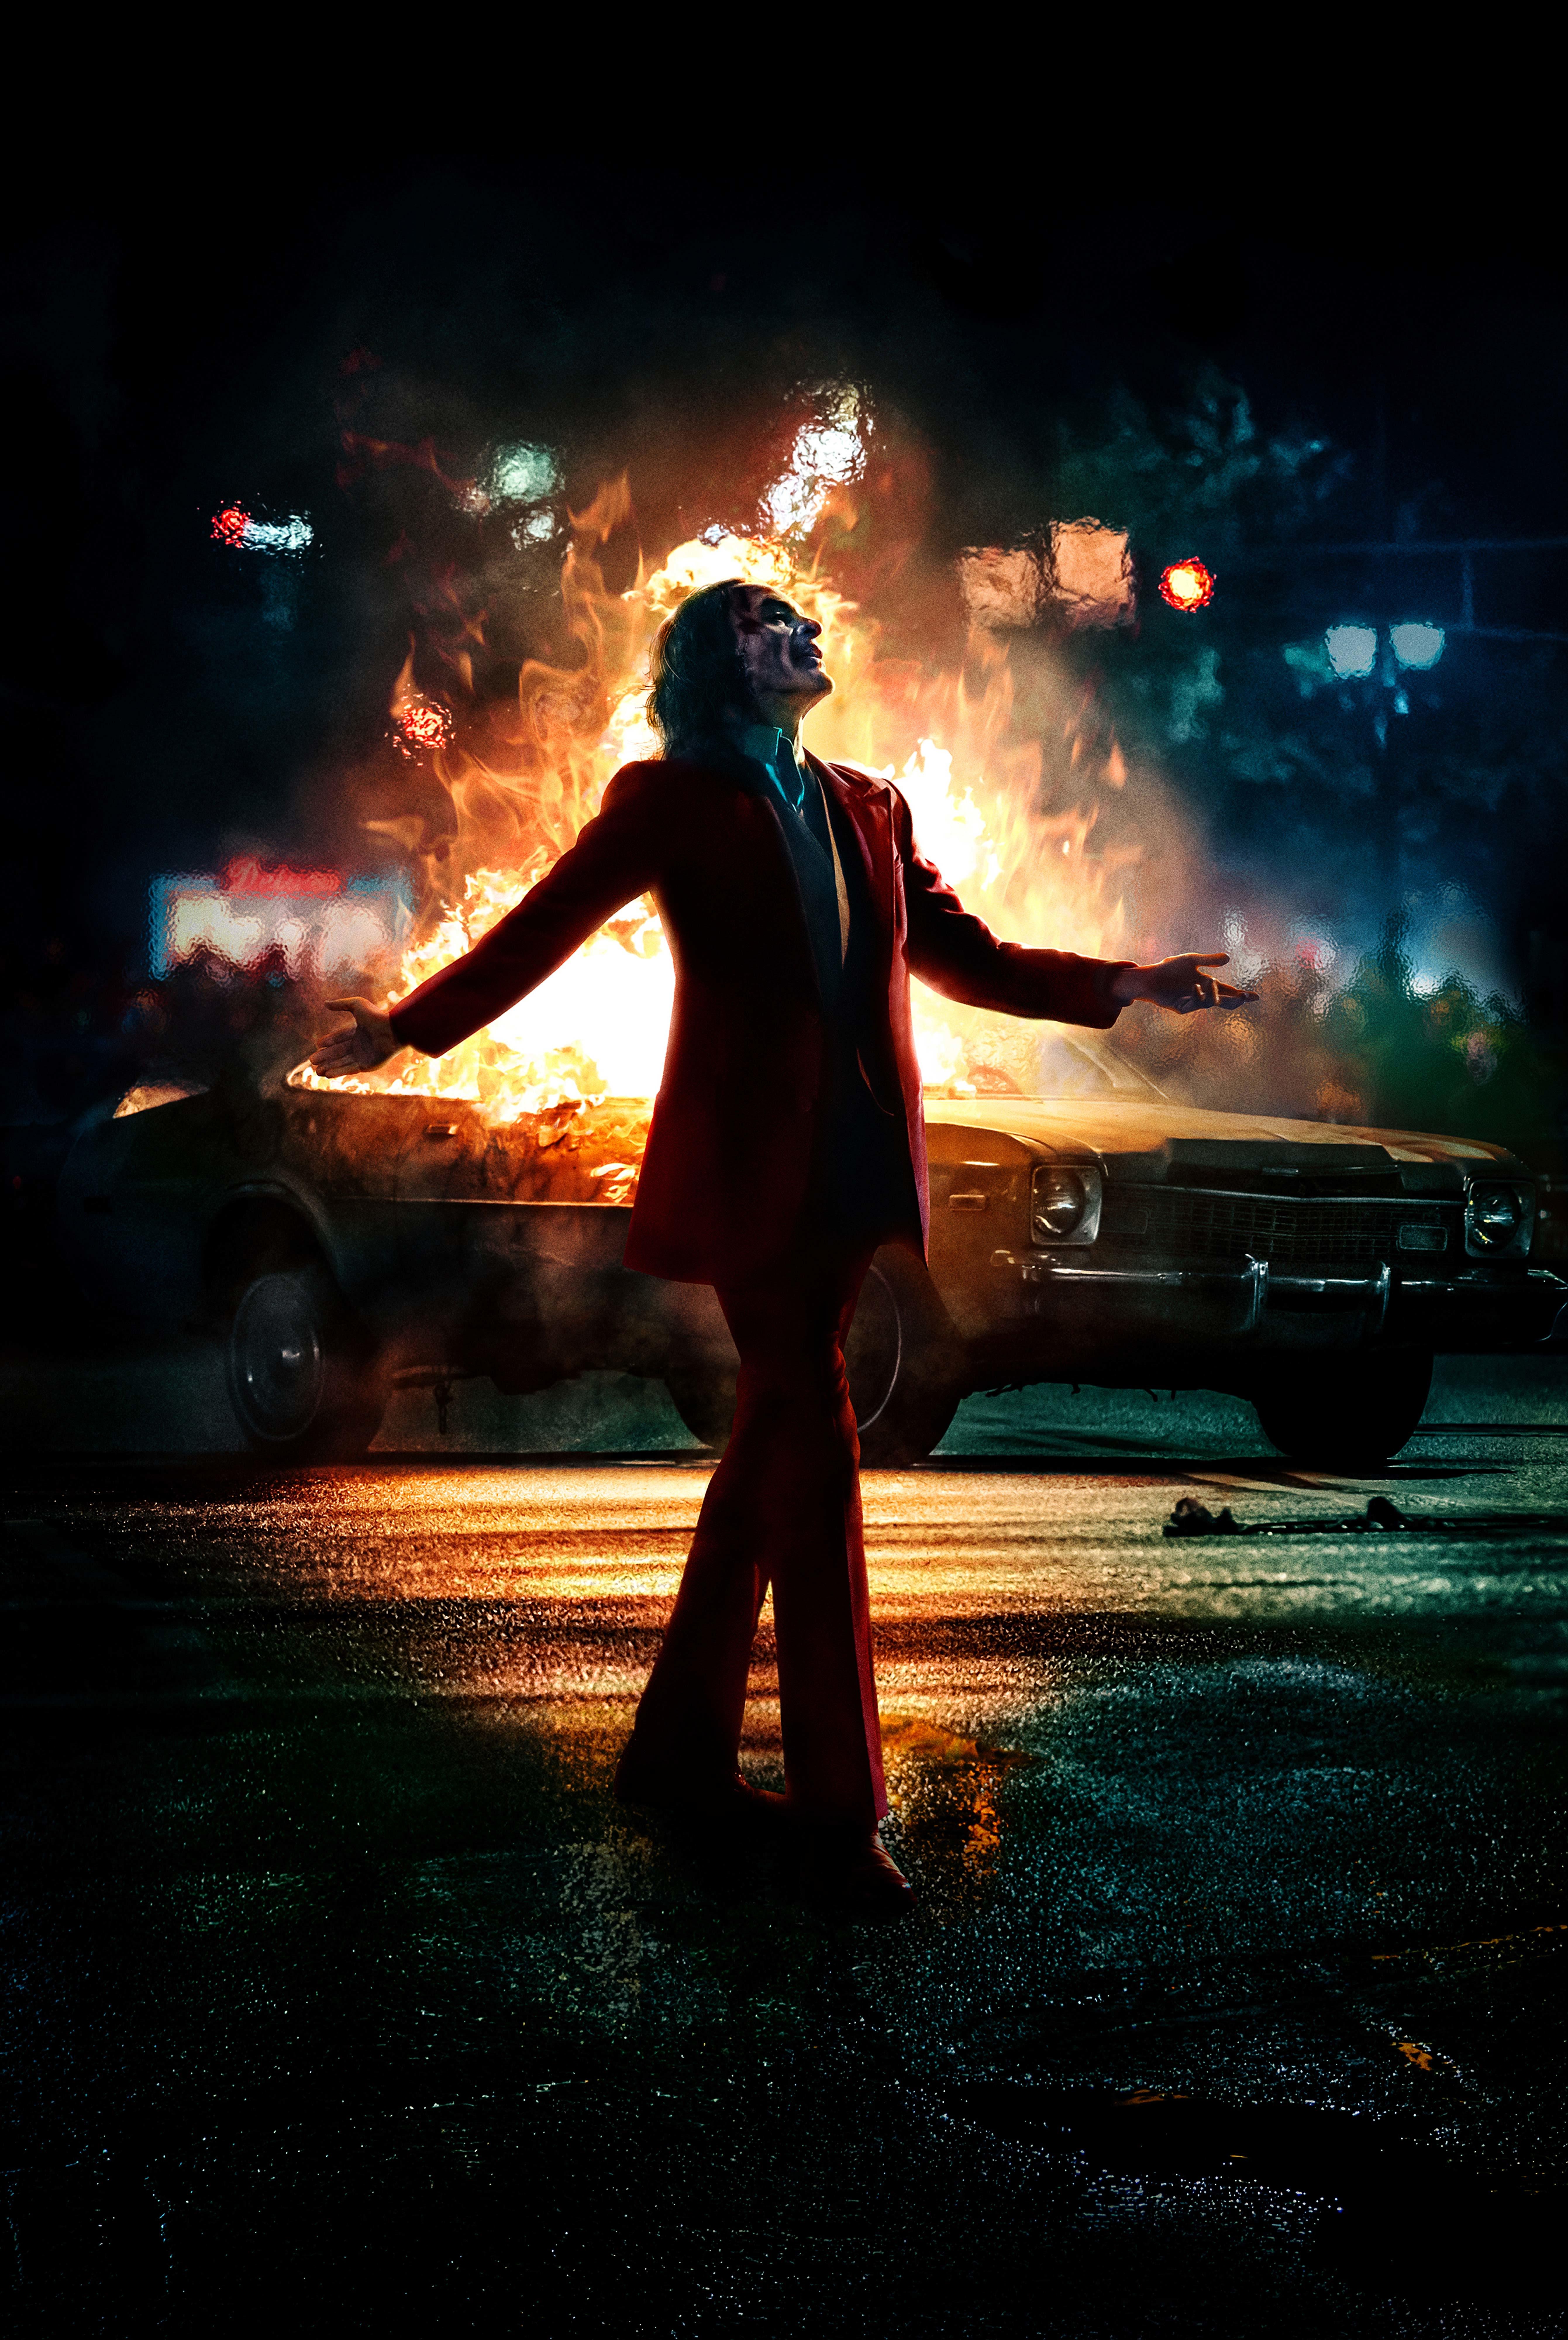 Joker IMAX Poster Wallpaper, HD Movies 4K Wallpaper, Image, Photo and Background